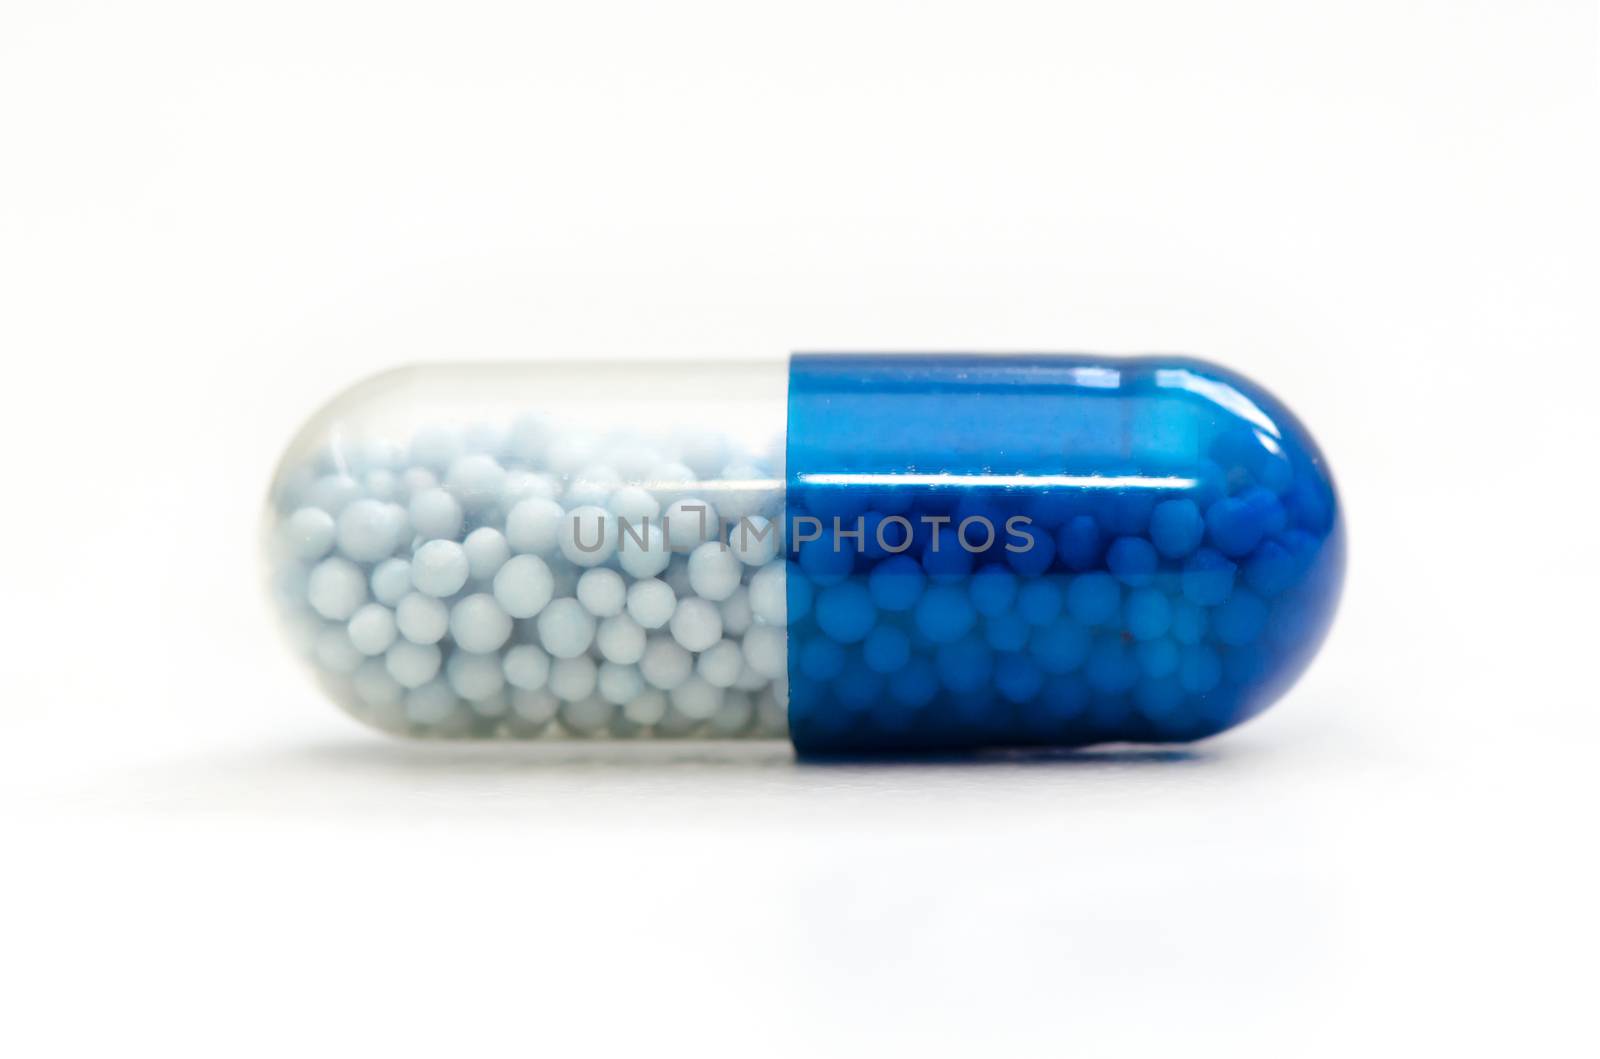 Lot of pills capsules close up. pill medicine capsule health care macro pharmacy drug concept